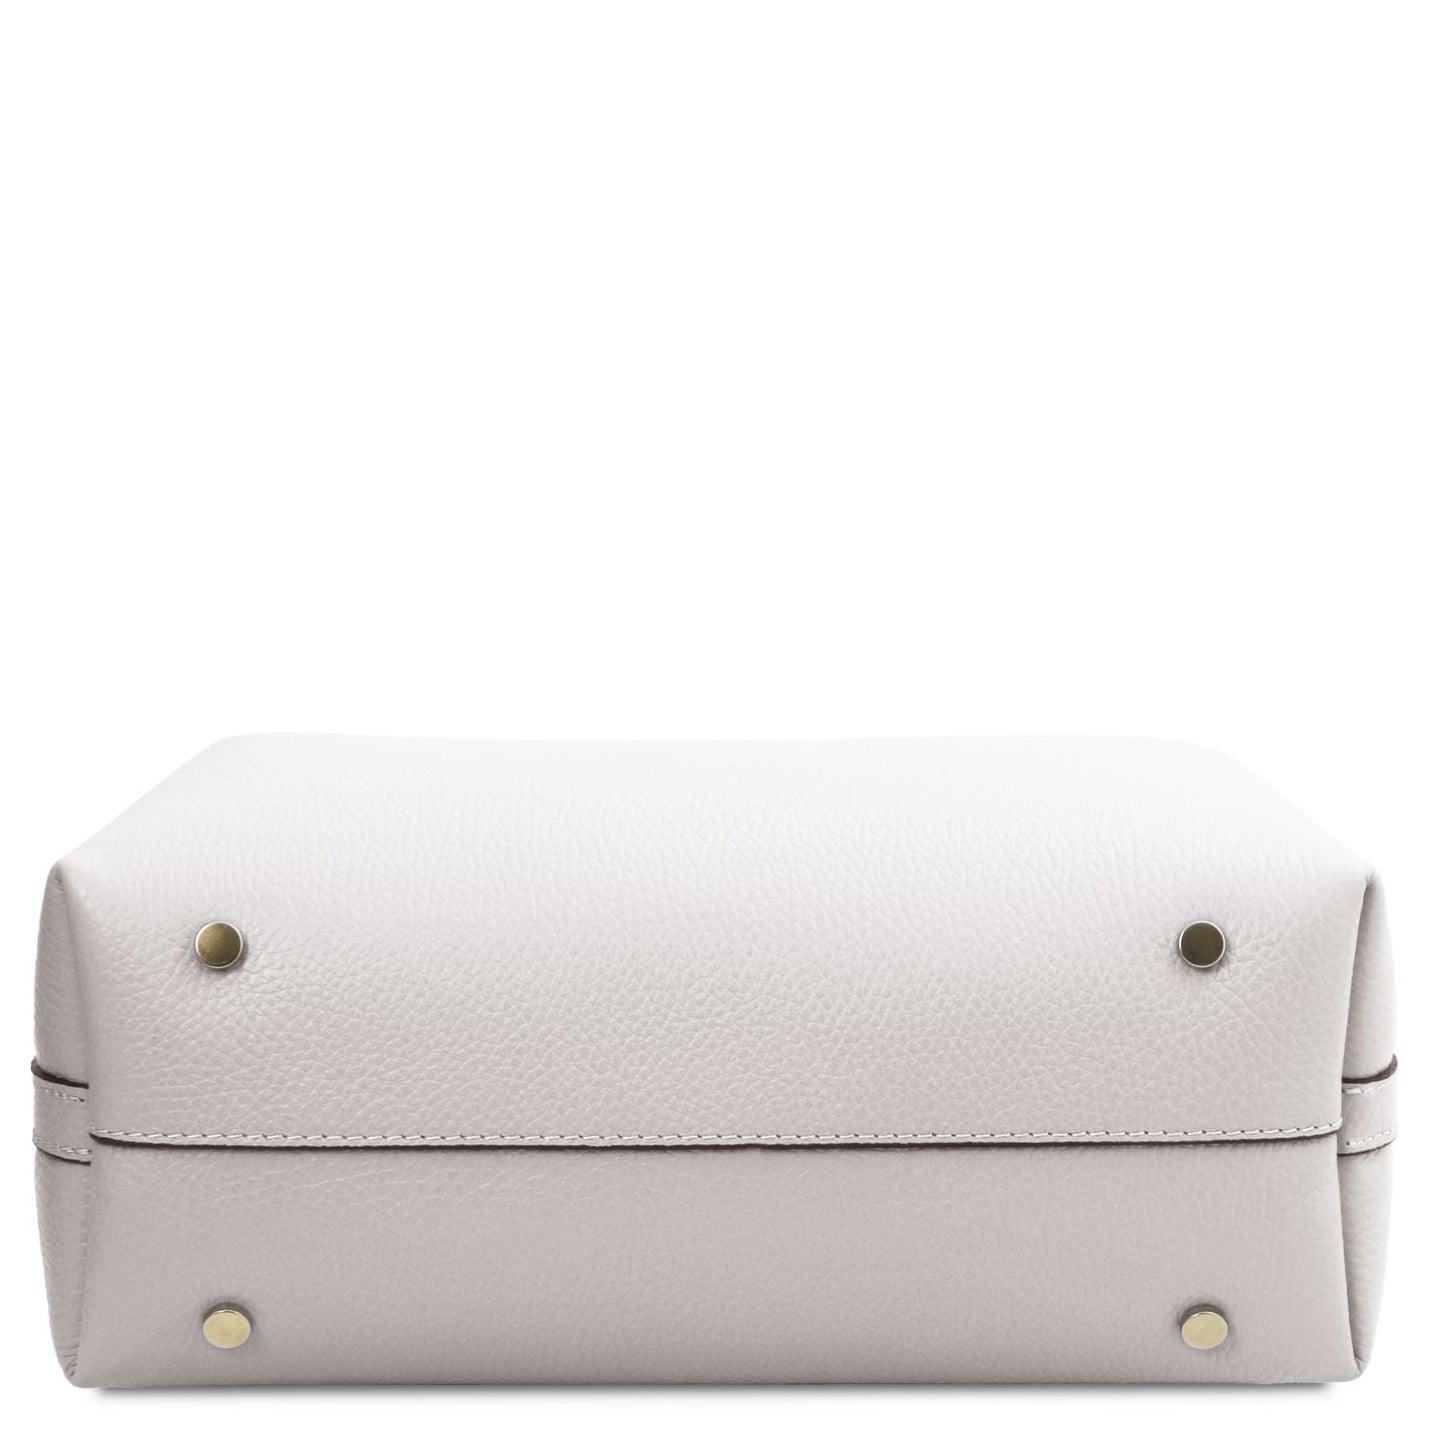 Clio - Pebbled leather bucket bag | TL142356 - Premium Leather handbags - Shop now at San Rocco Italia